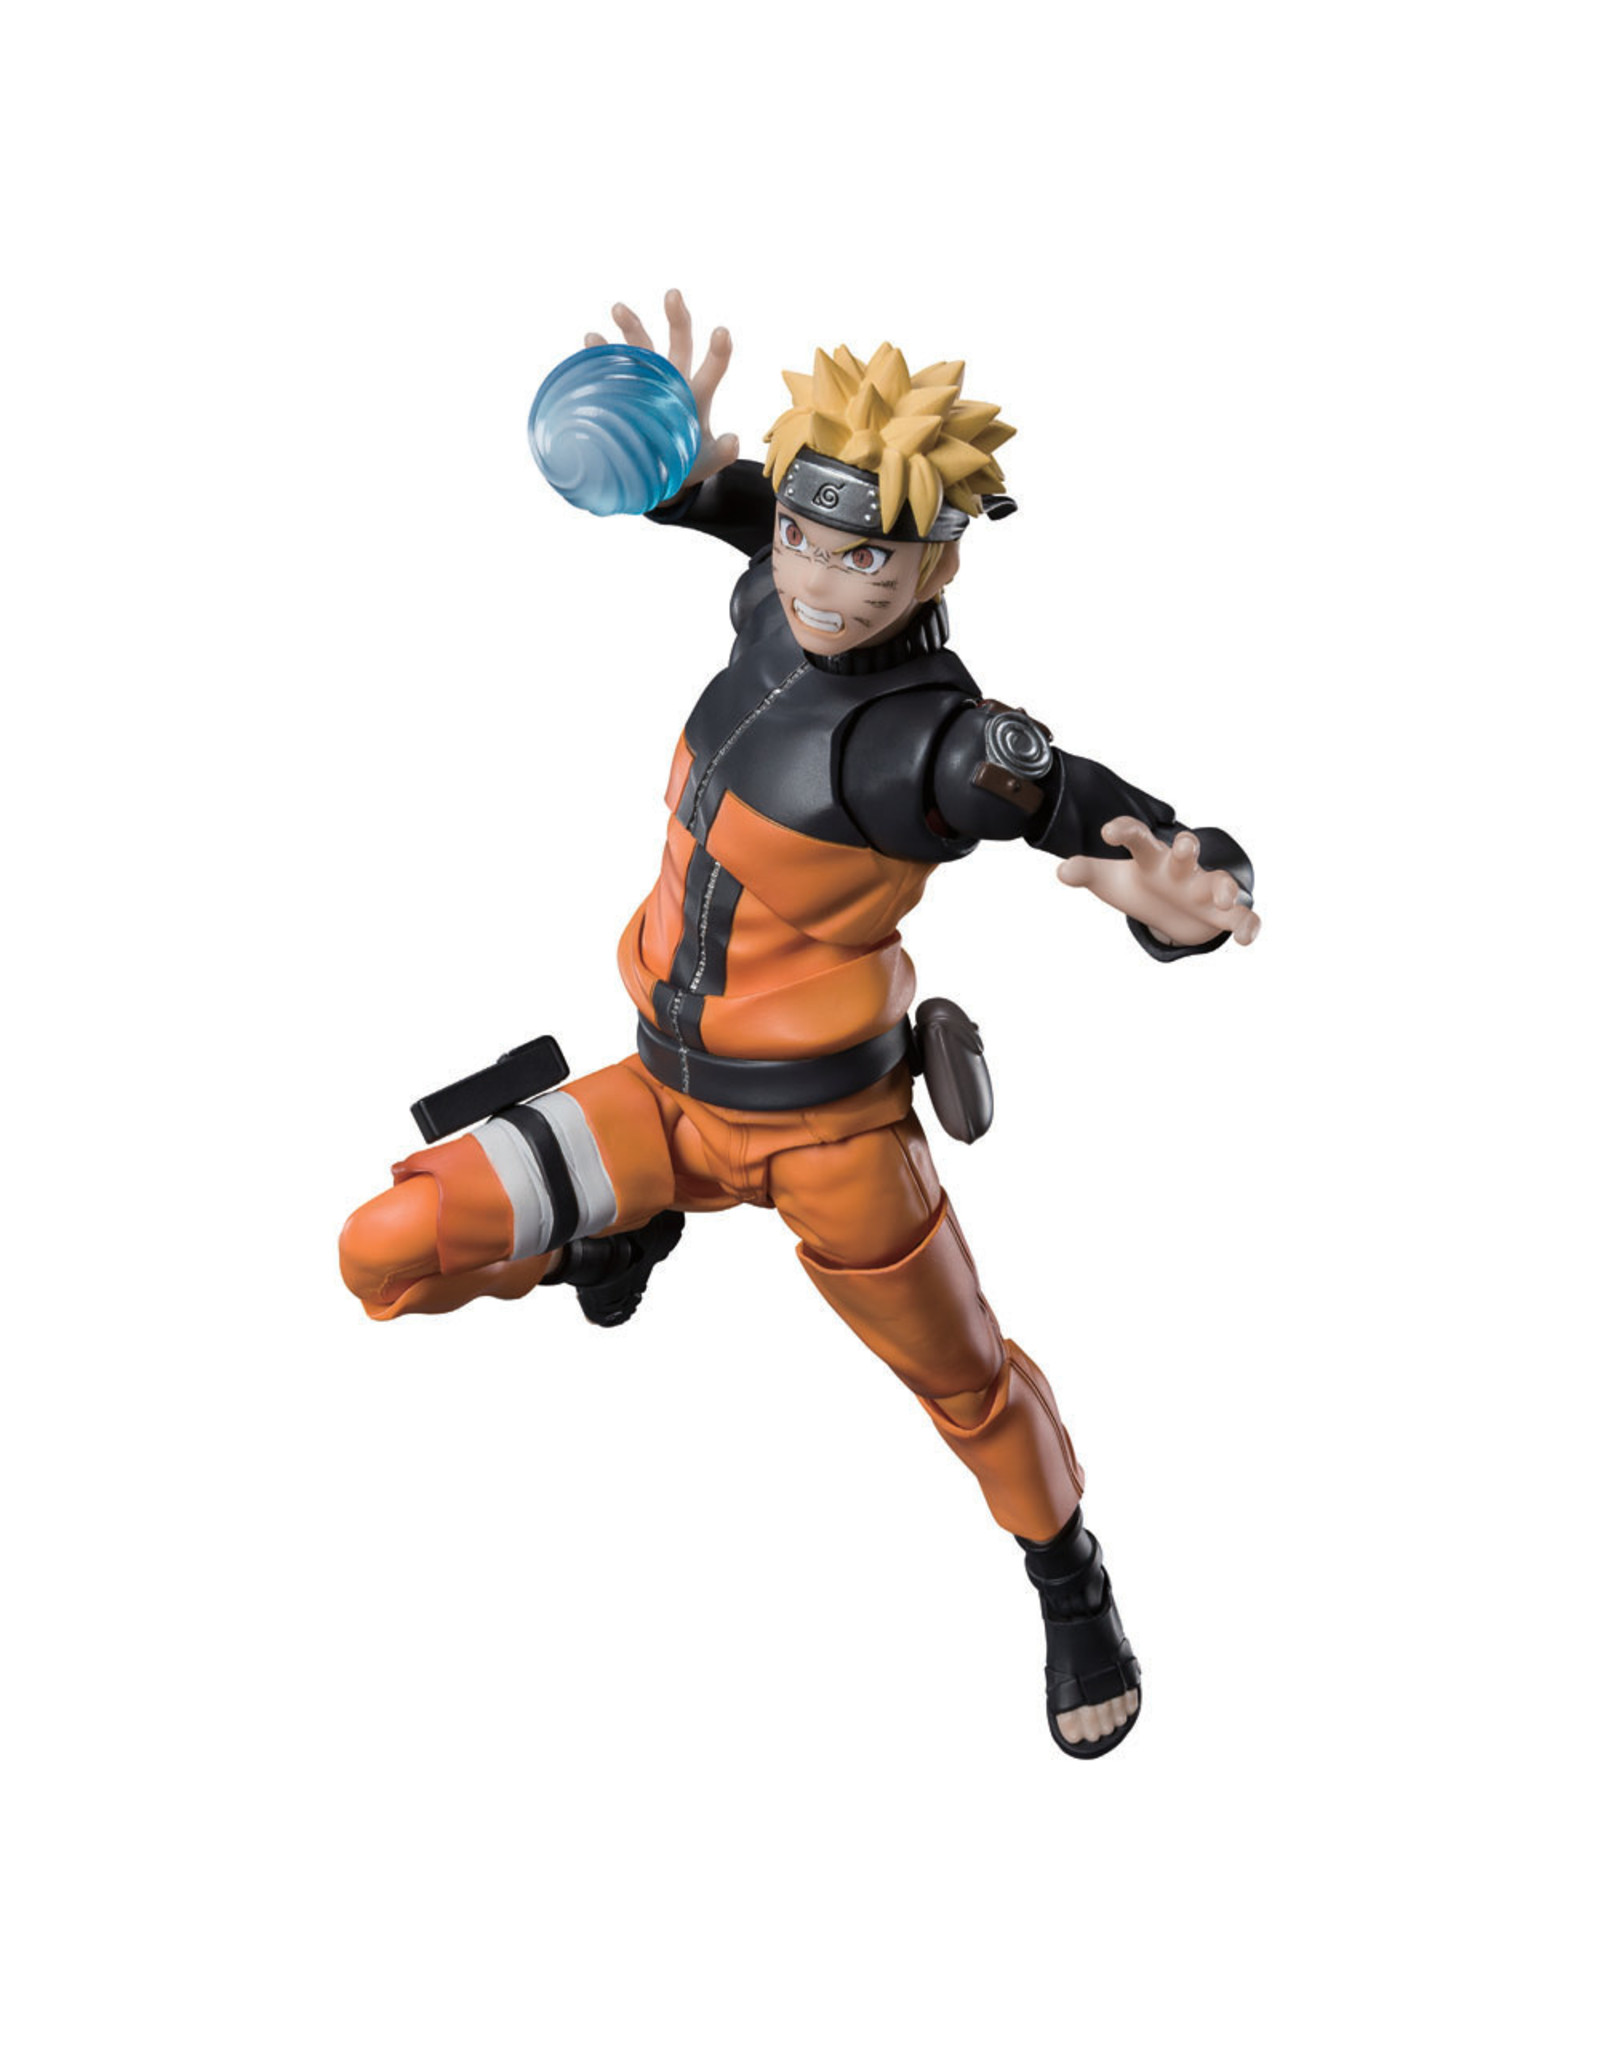 Naruto Shippuden - Naruto Uzumaki: The Jinchuuriki entrusted with Hope S.H. Figuarts Action Figure - 14 cm